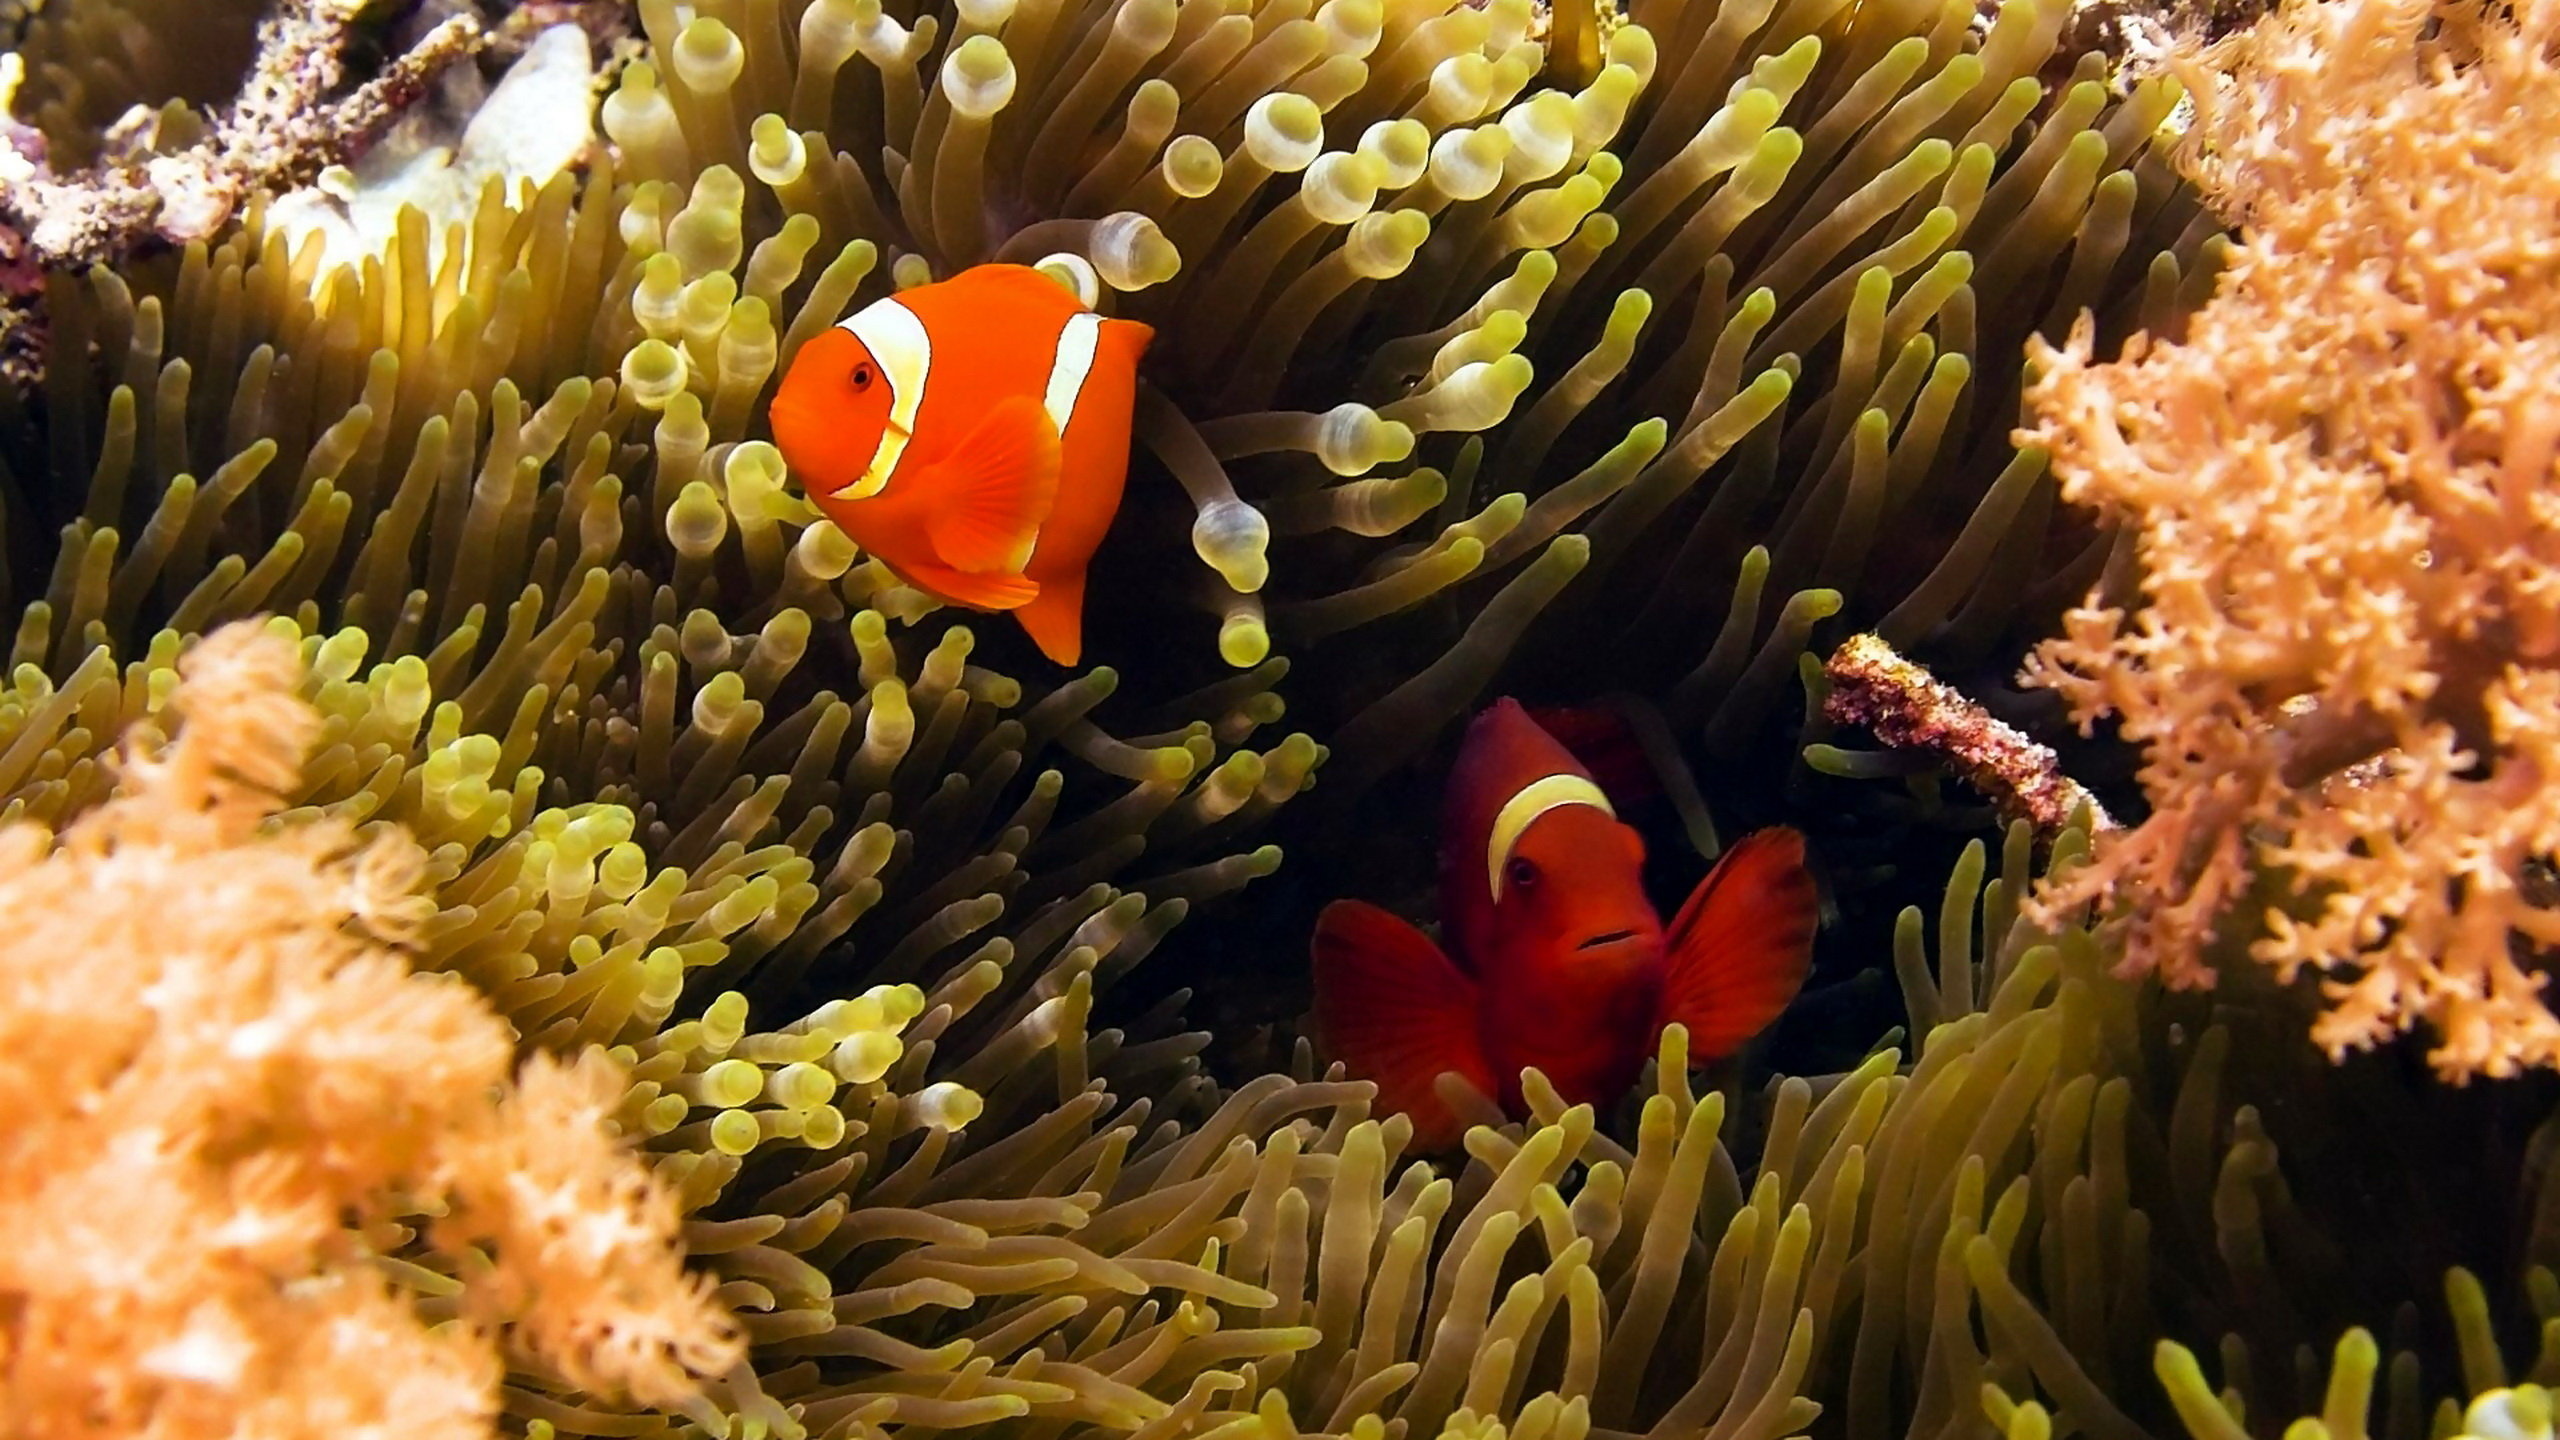 Colorful clownfish, Desktop wallpaper background, Marine life wonder, Underwater paradise, 2560x1440 HD Desktop